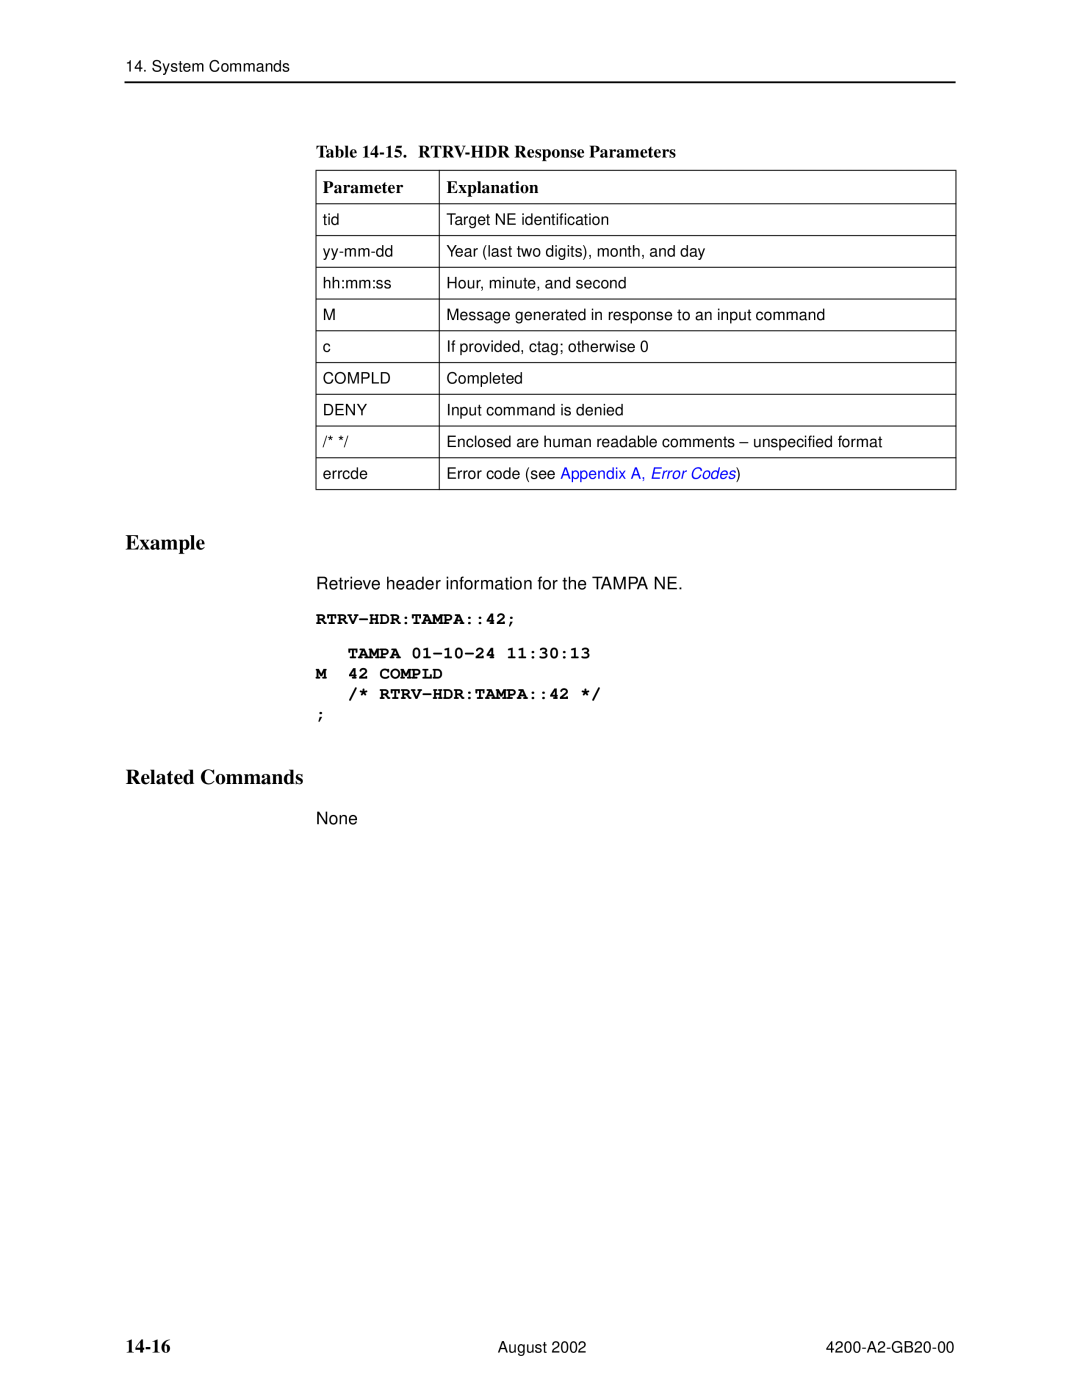 Paradyne 4200 14-16, 15. RTRV-HDR Response Parameters, RTRV-HDRTAMPA42 TAMPA 01-10-24 M 42 COMPLD RTRV-HDRTAMPA42, Example 